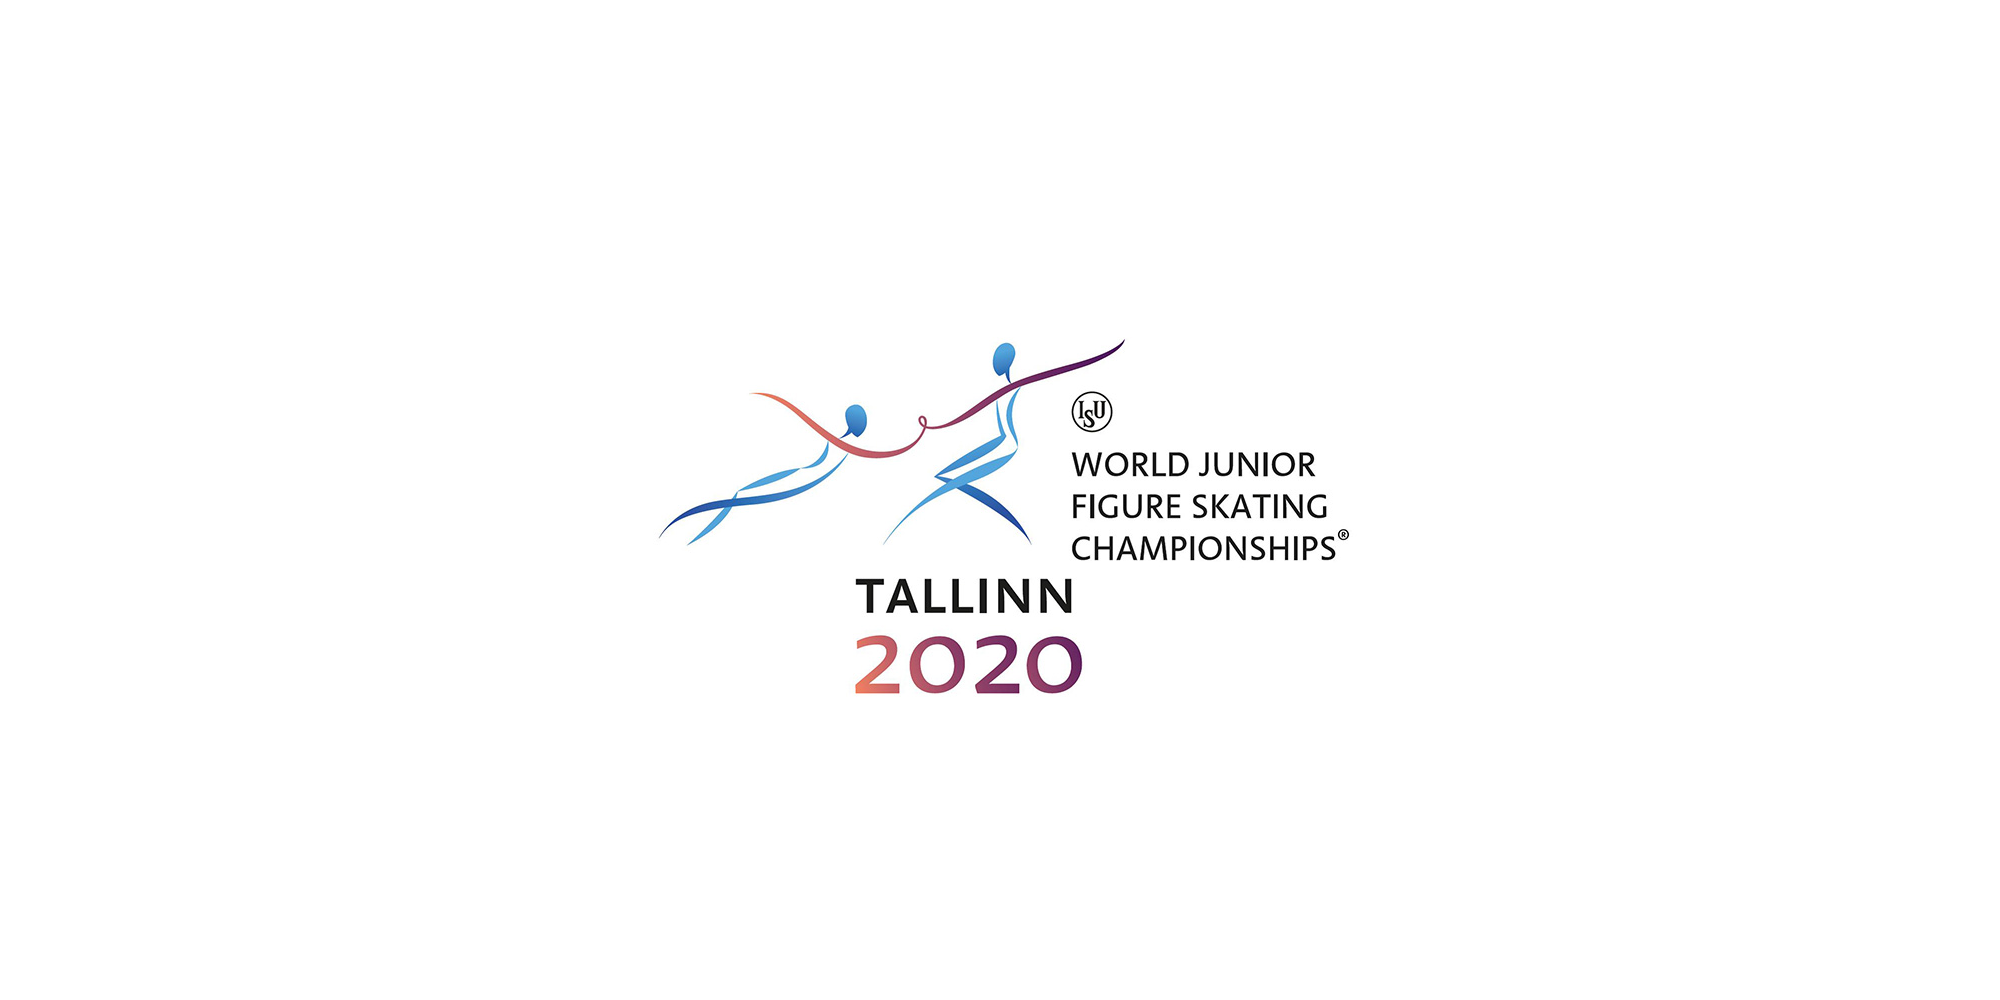 World Junior Figure Skating Championships 2020 — In The Loop